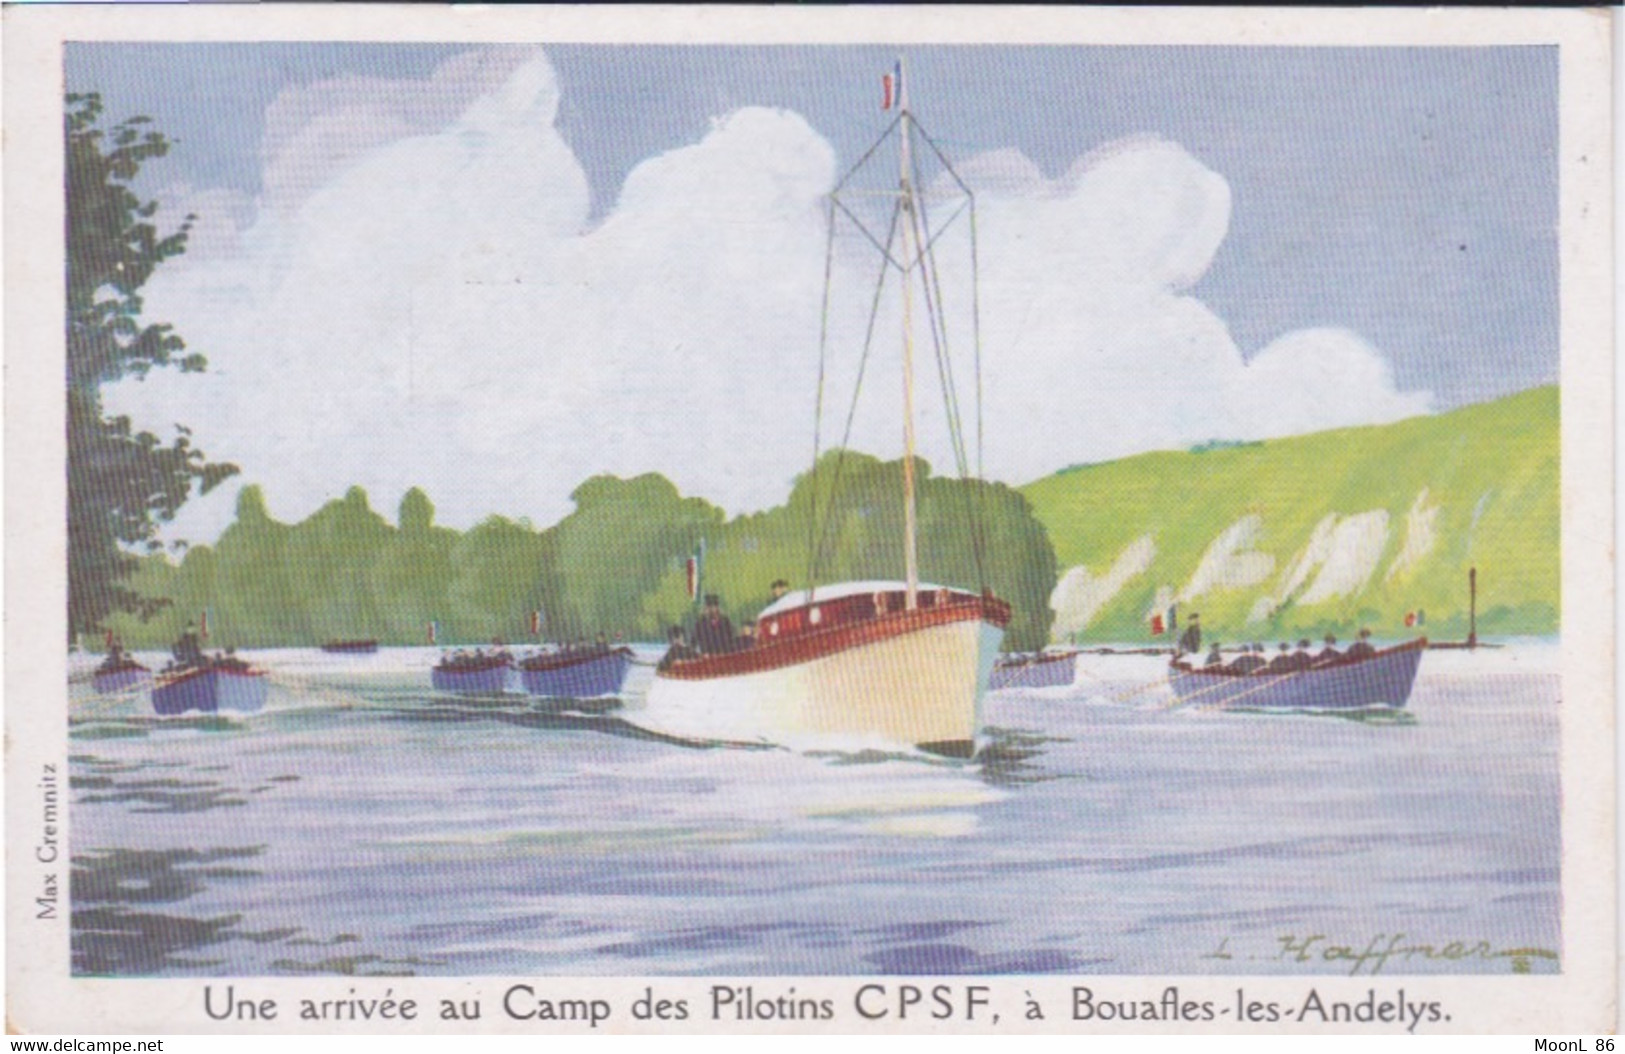 Illustration L.HAFFNER - UNE ARRIVEE AU CAMP DES PILOTINS - A BOUAFLES LES ANDELYS - Haffner